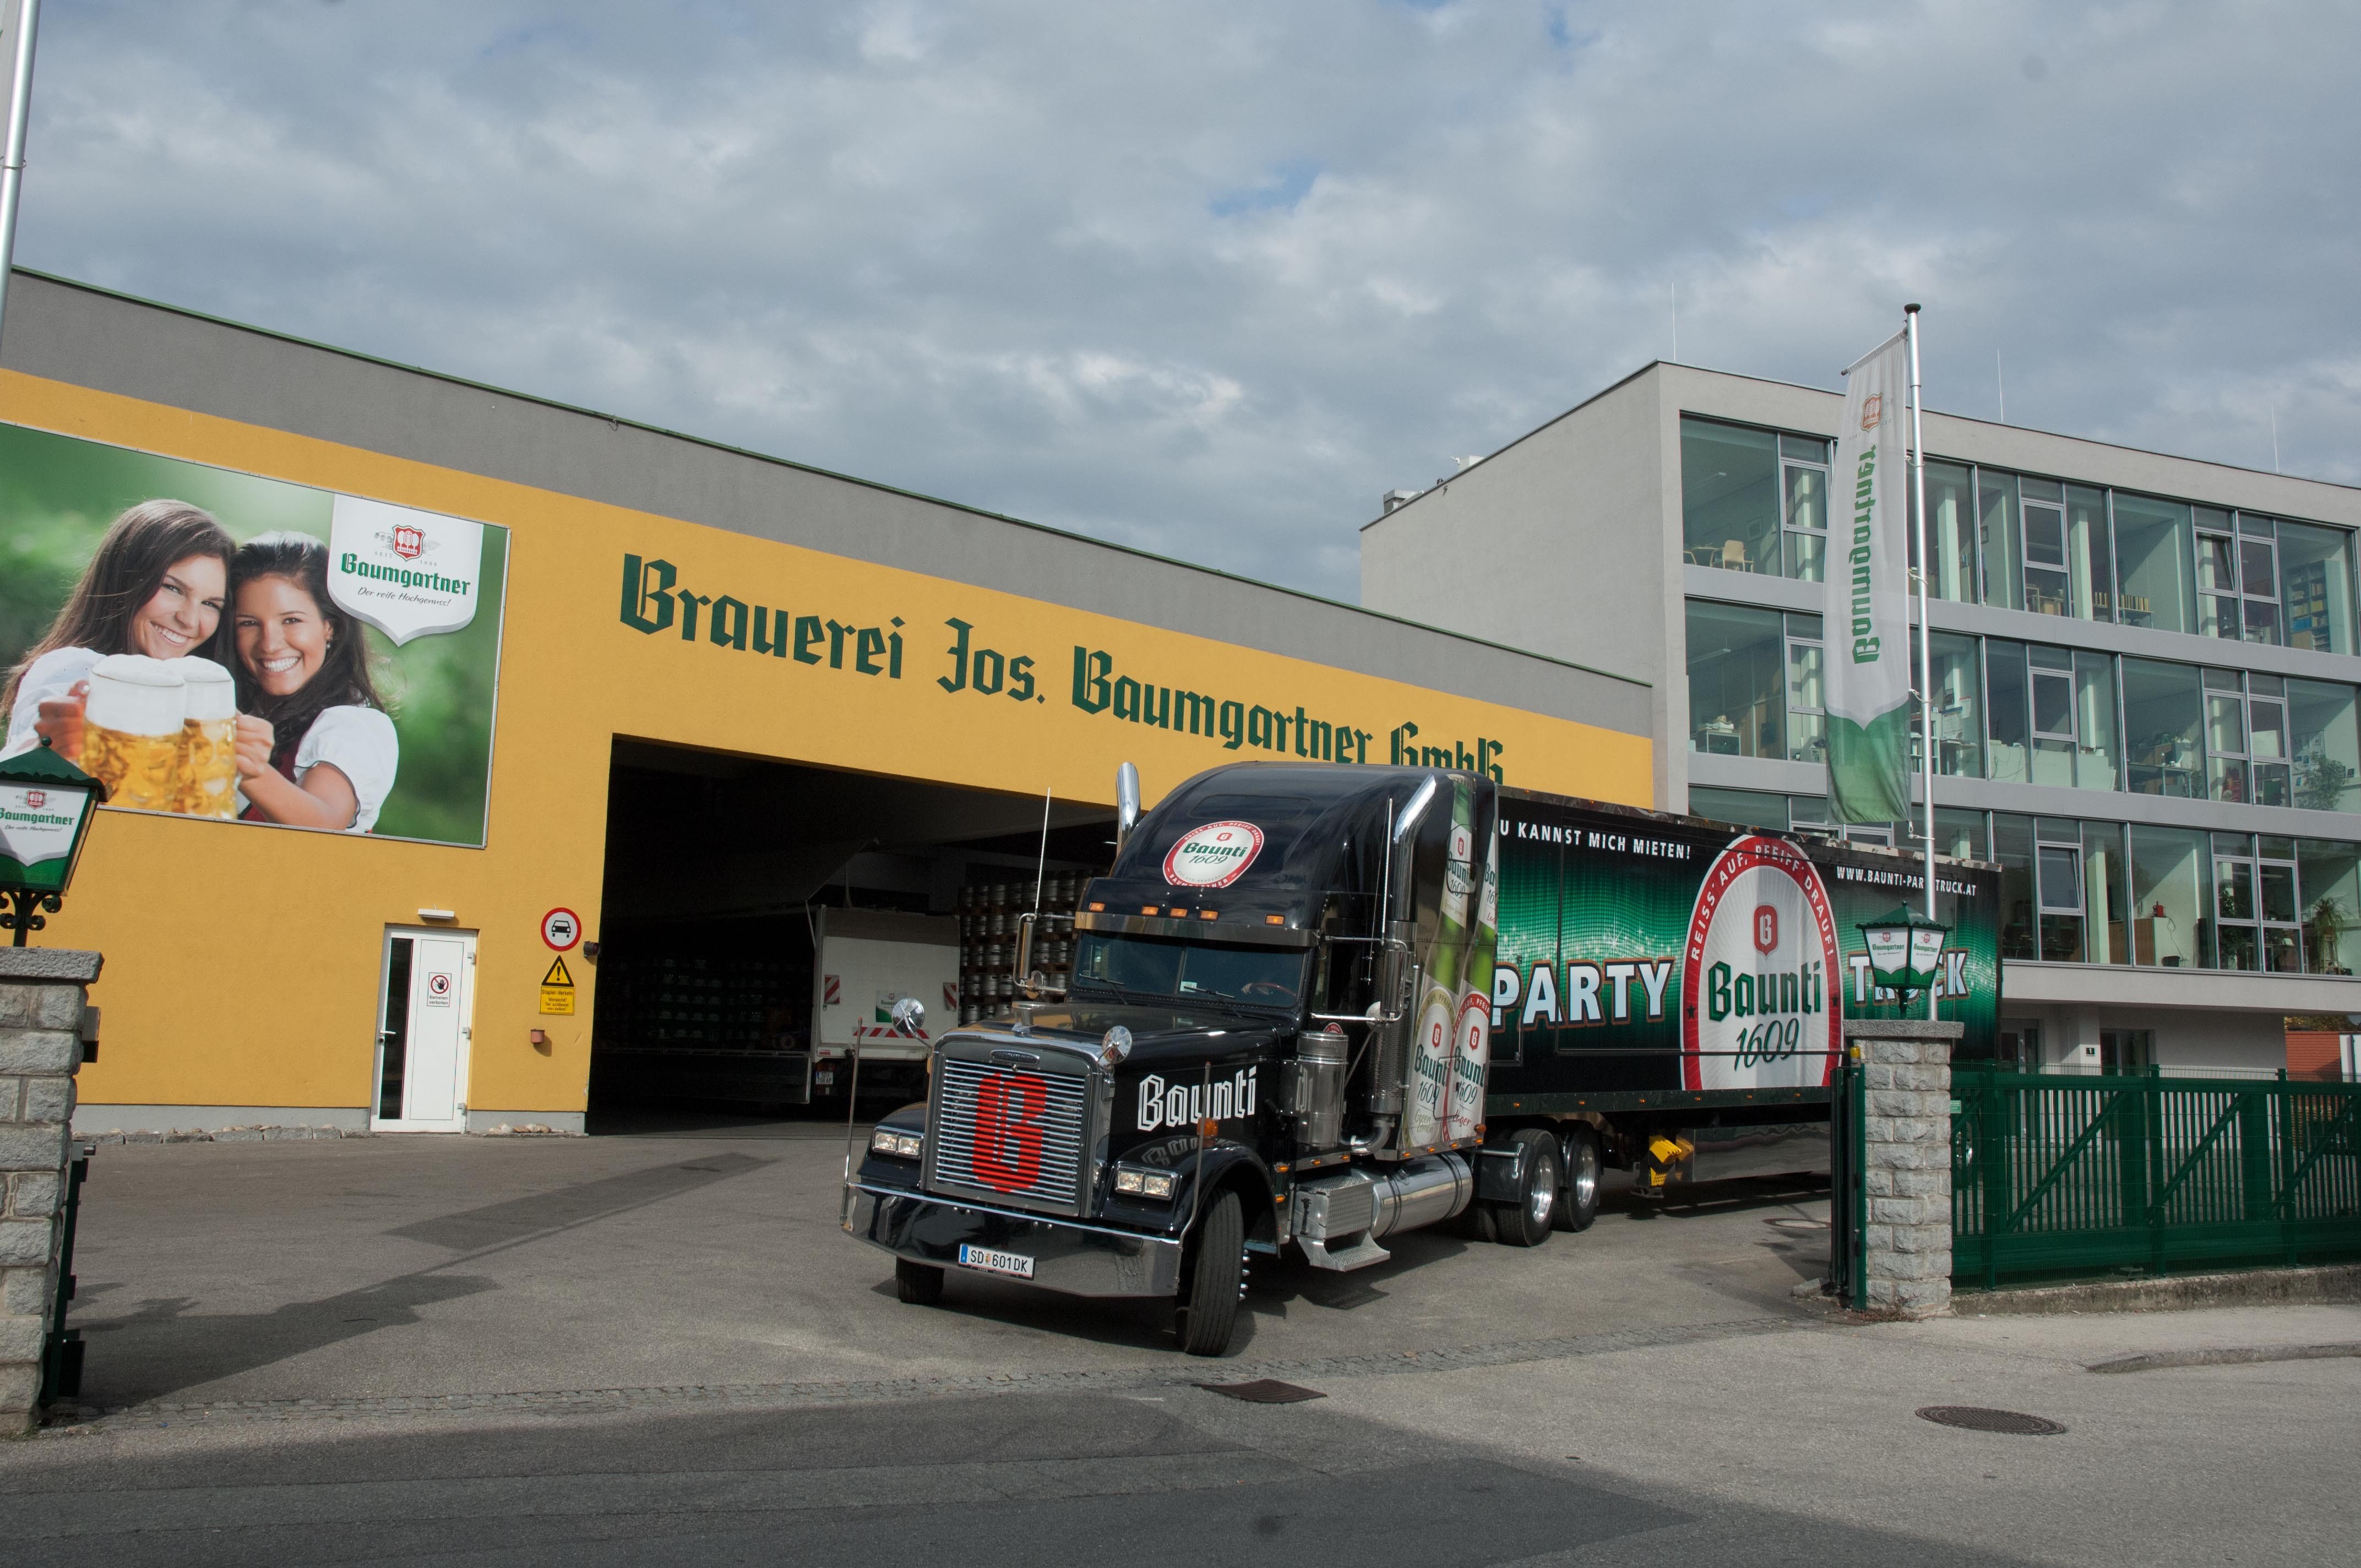 Brauerei Baumgartner brewery from Austria